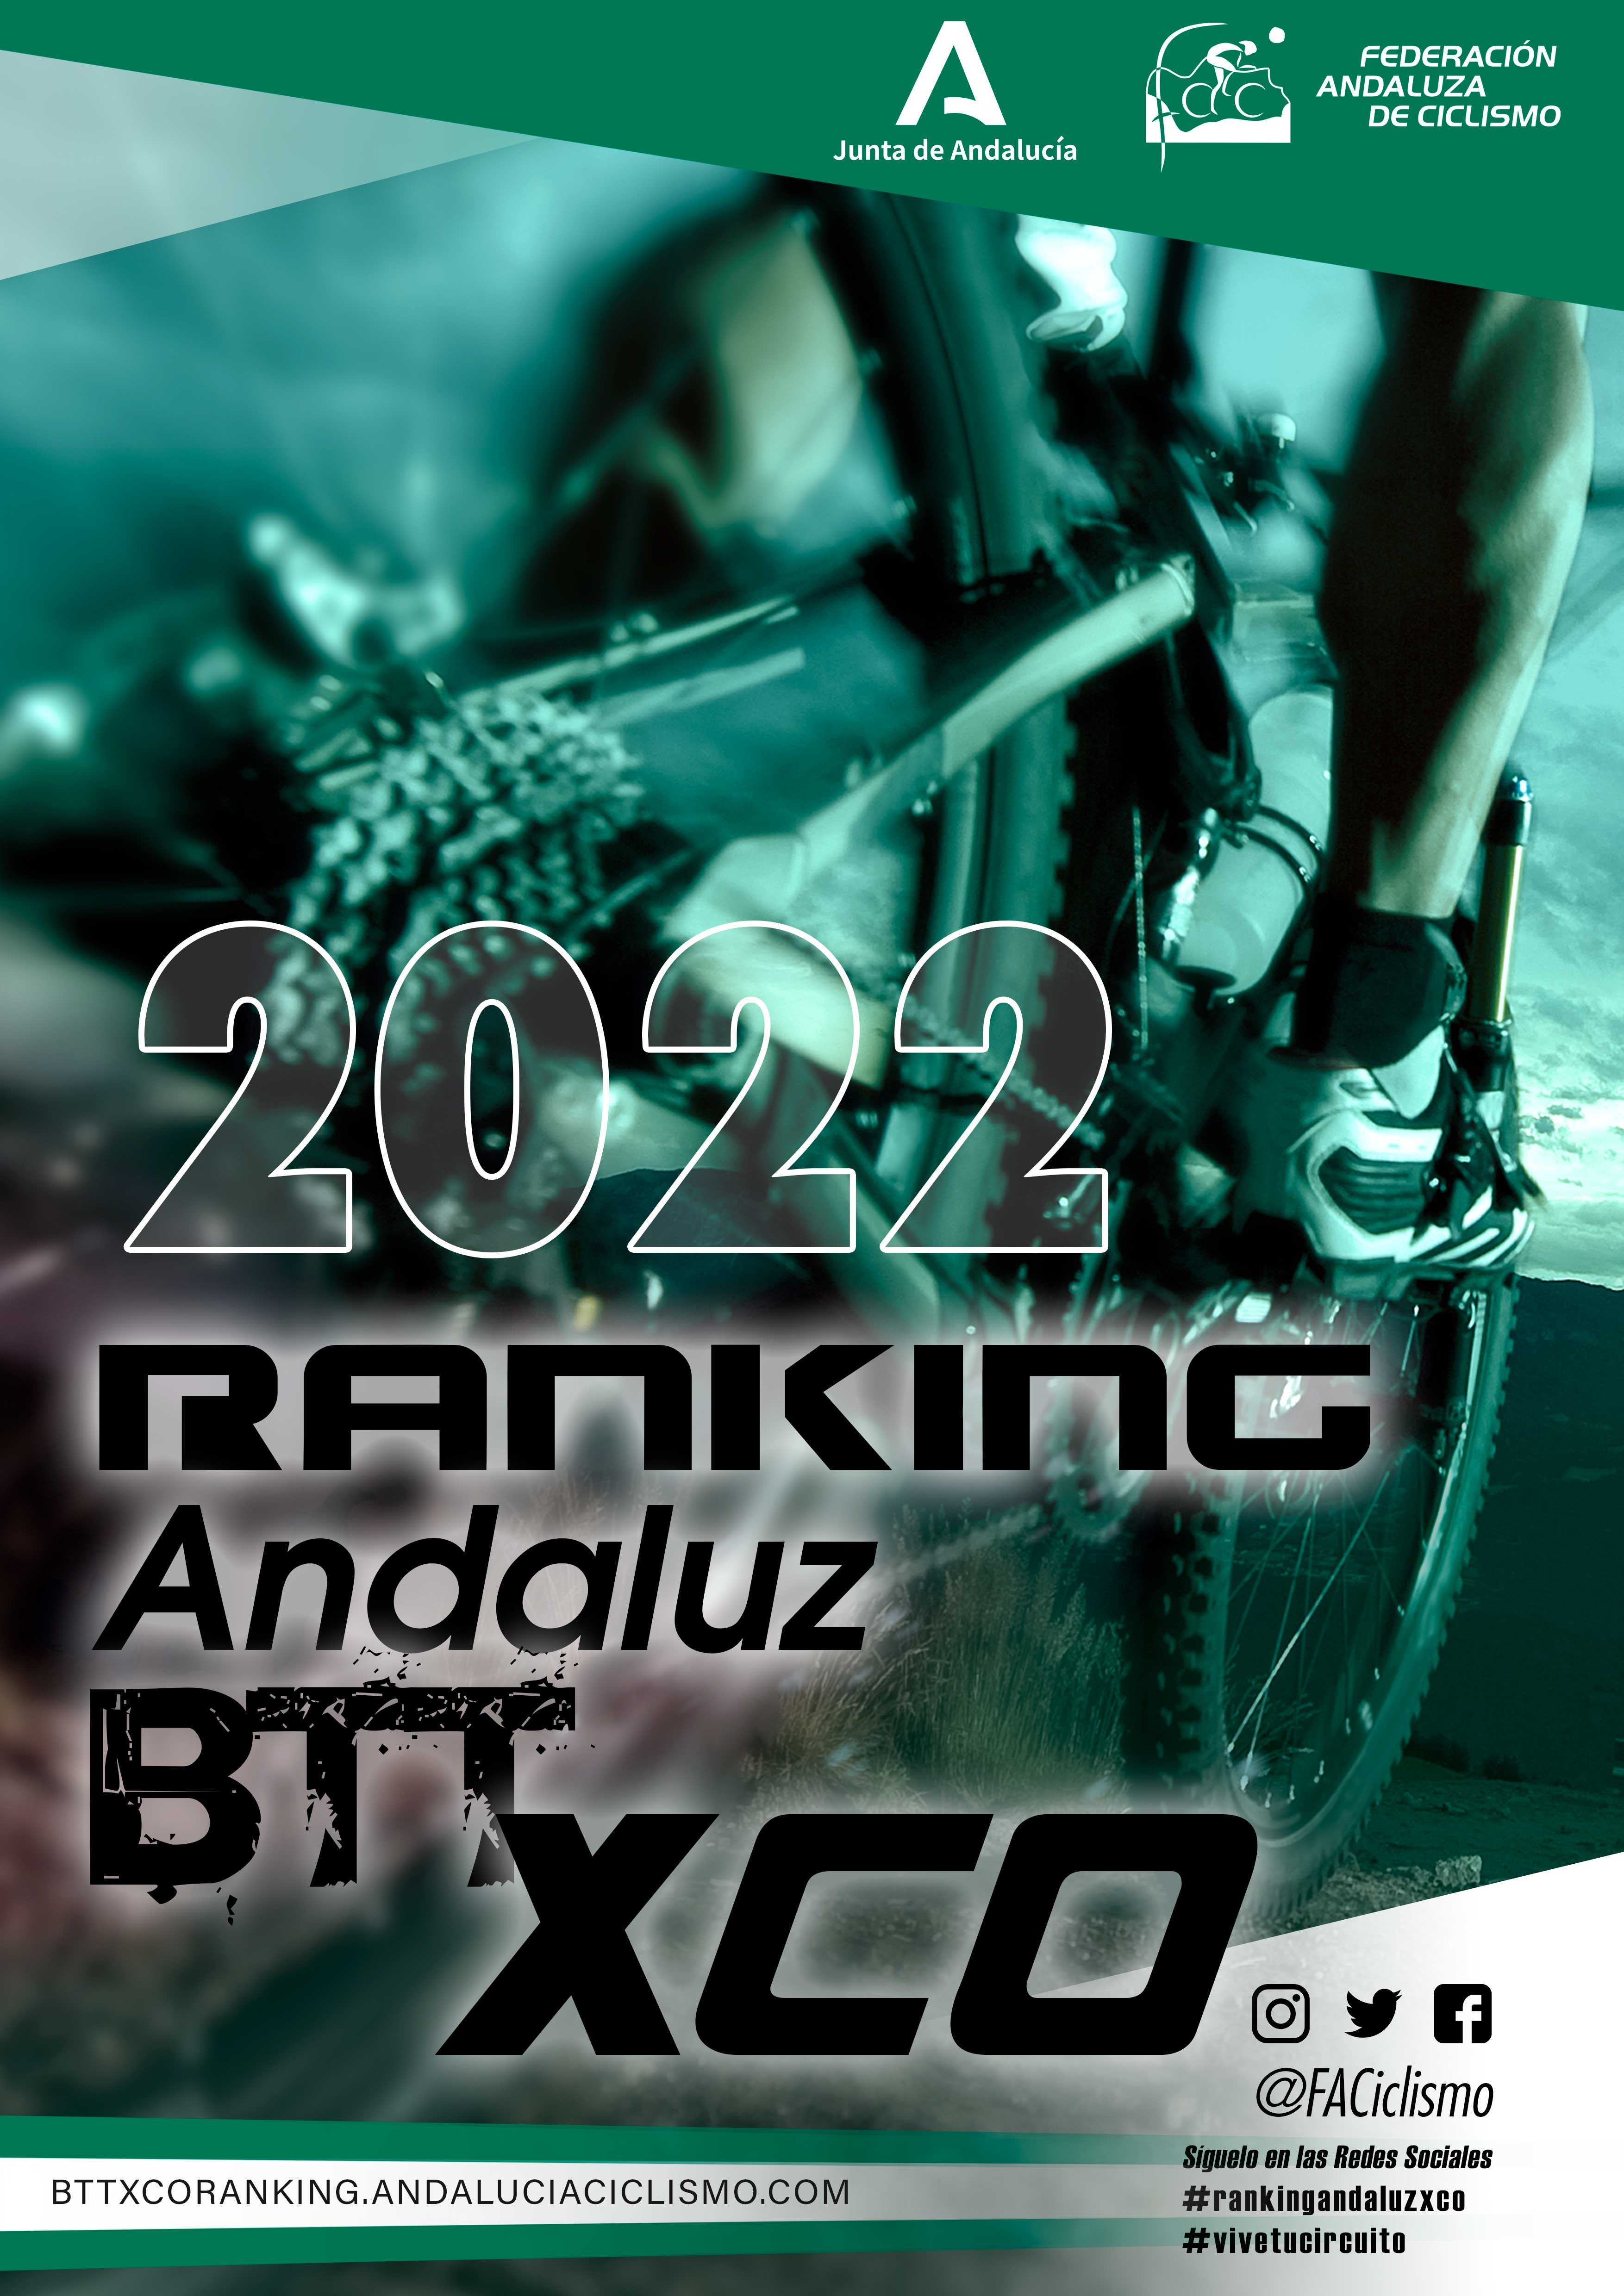 Lepe cerrará el cartel del Ranking Andaluz de XCO 2022